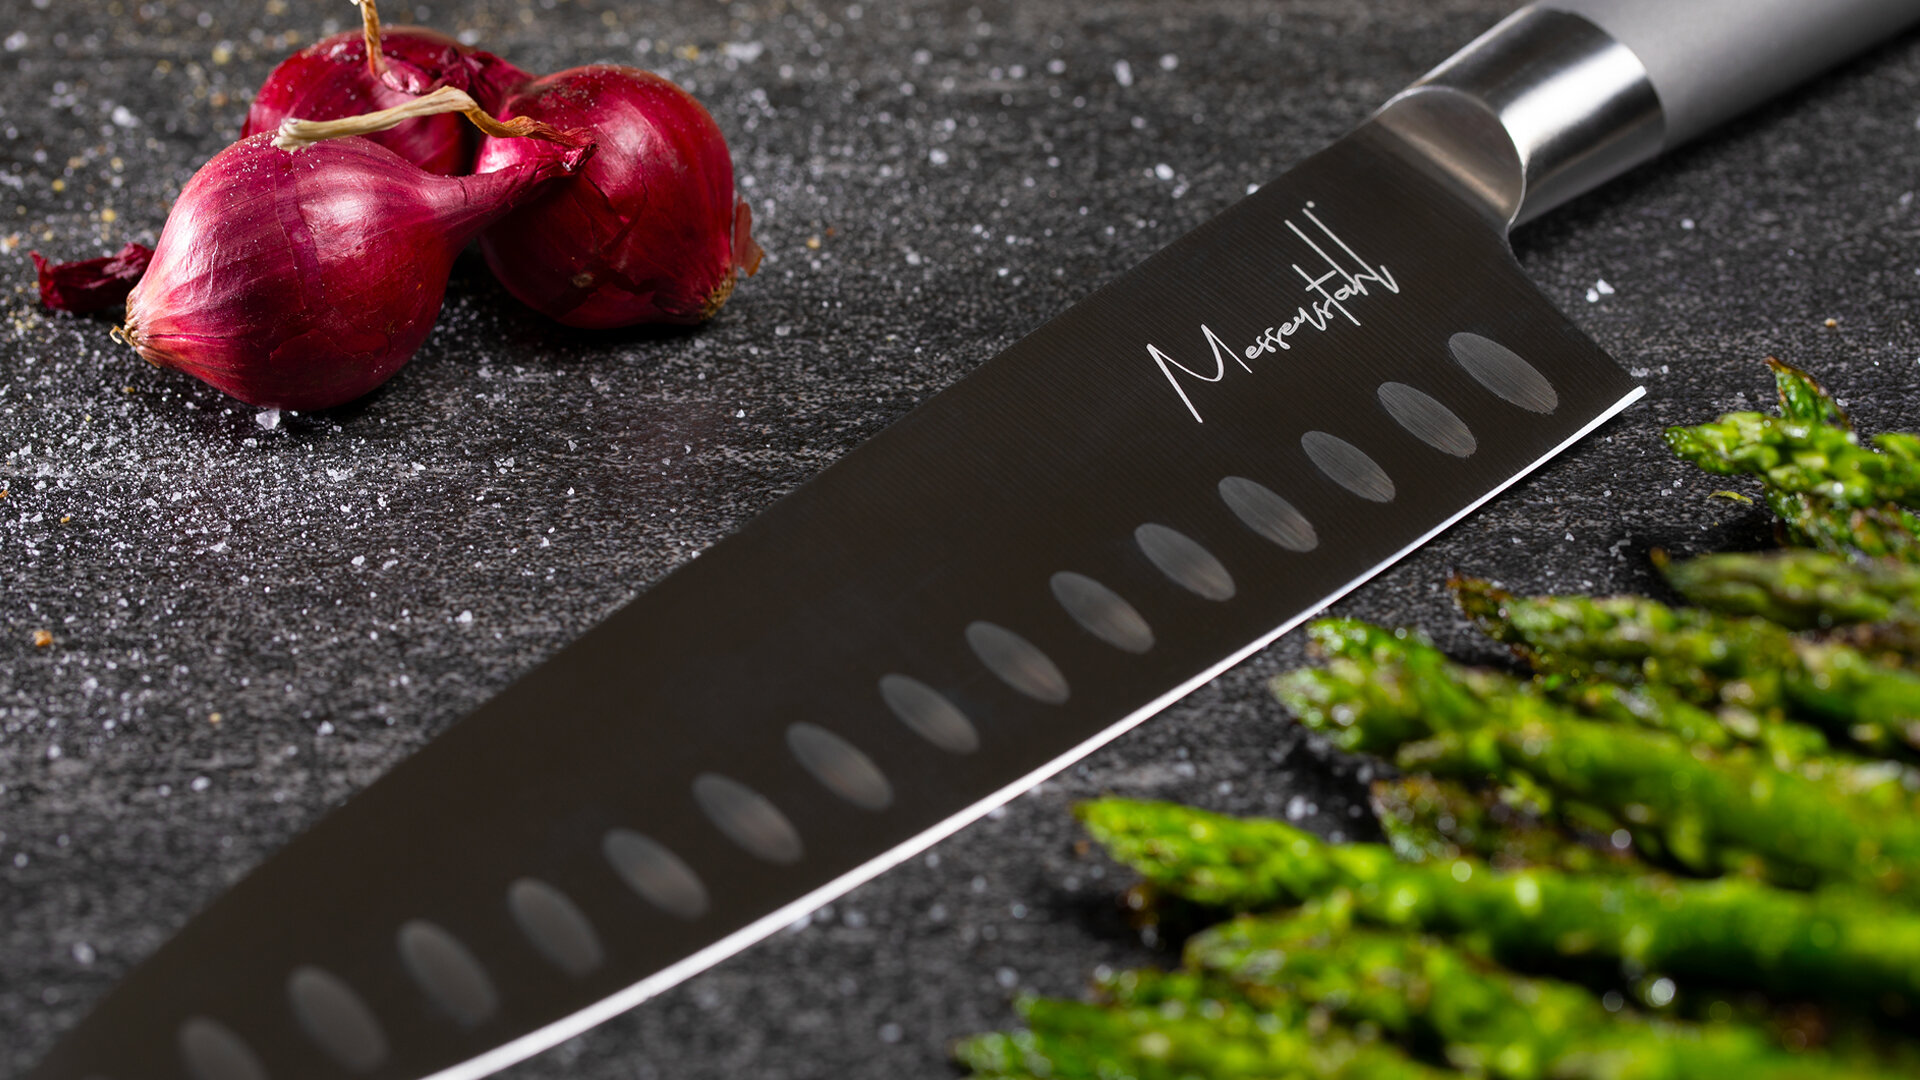 5-Piece Completer Knife Set — Messerstahl 2.0 – Knives that look sharp too.